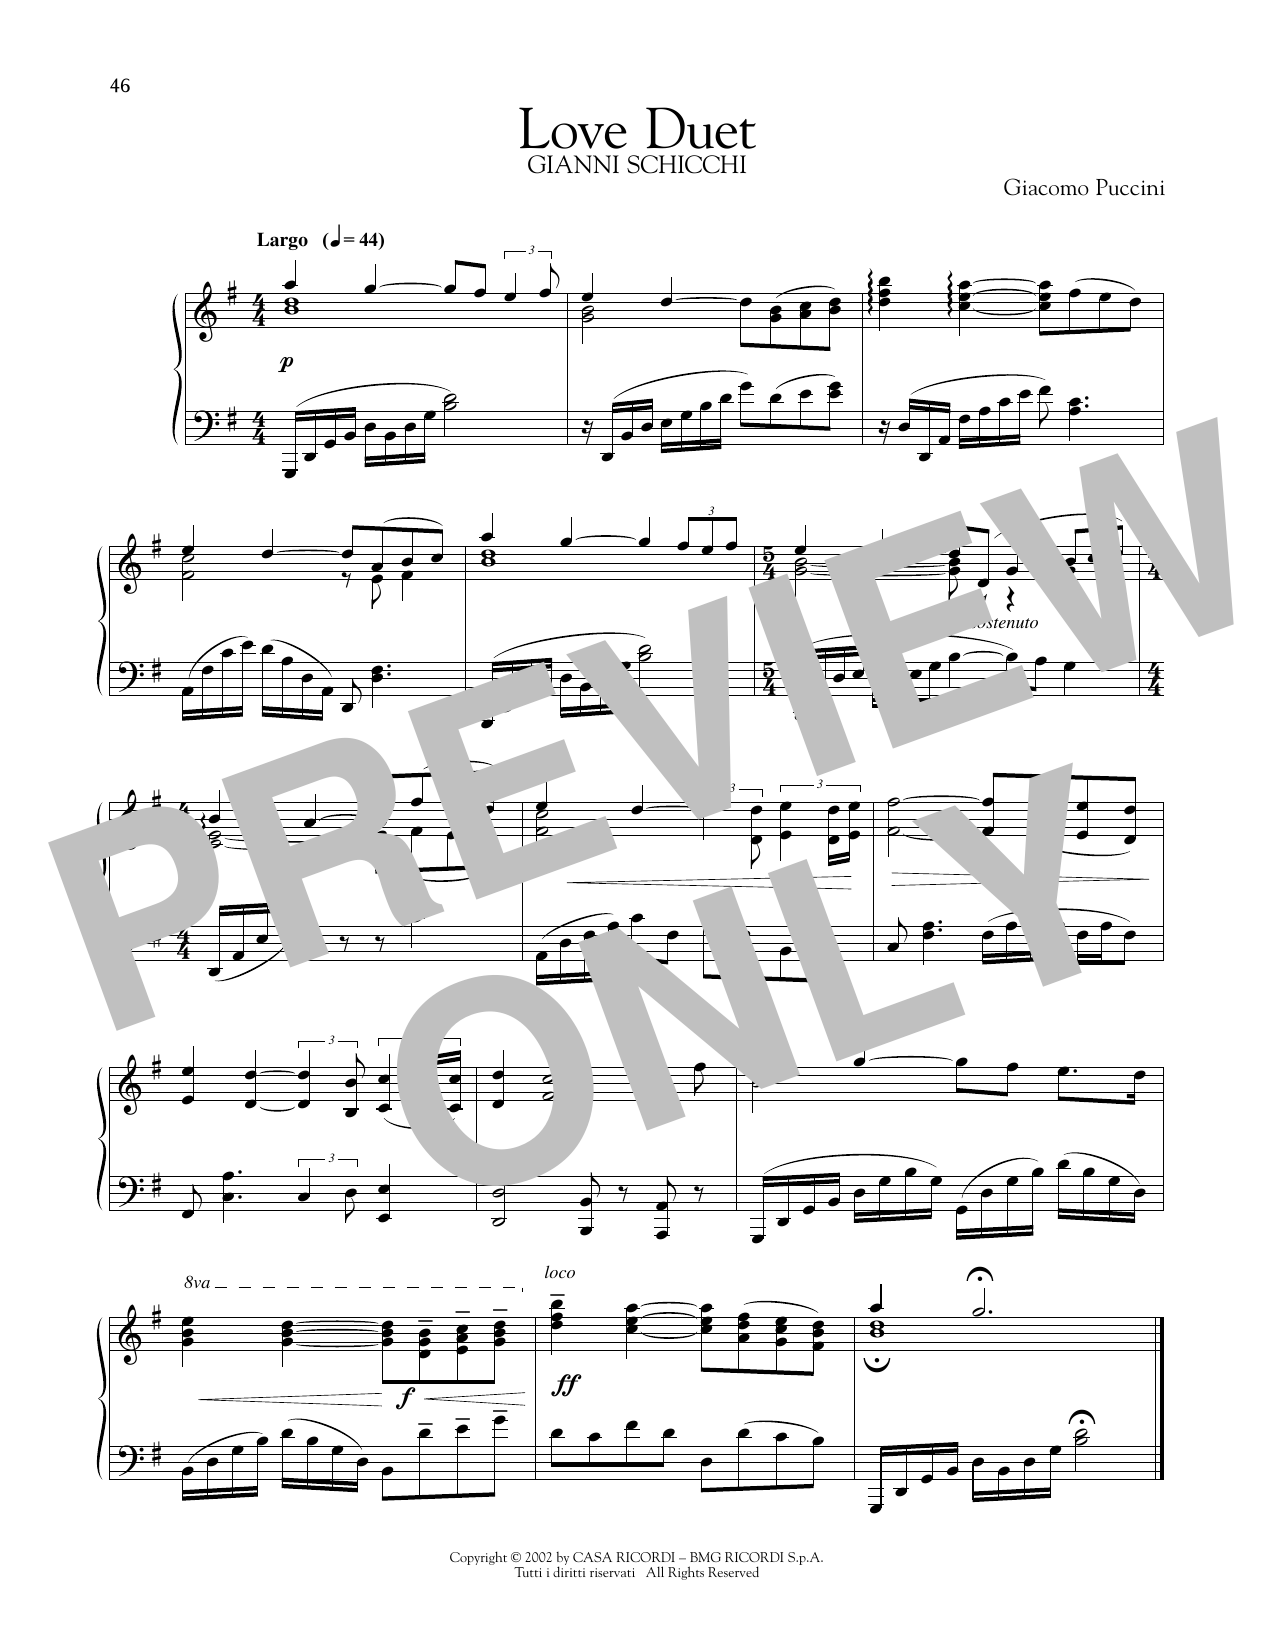 Giacomo Puccini Love Duet sheet music notes printable PDF score